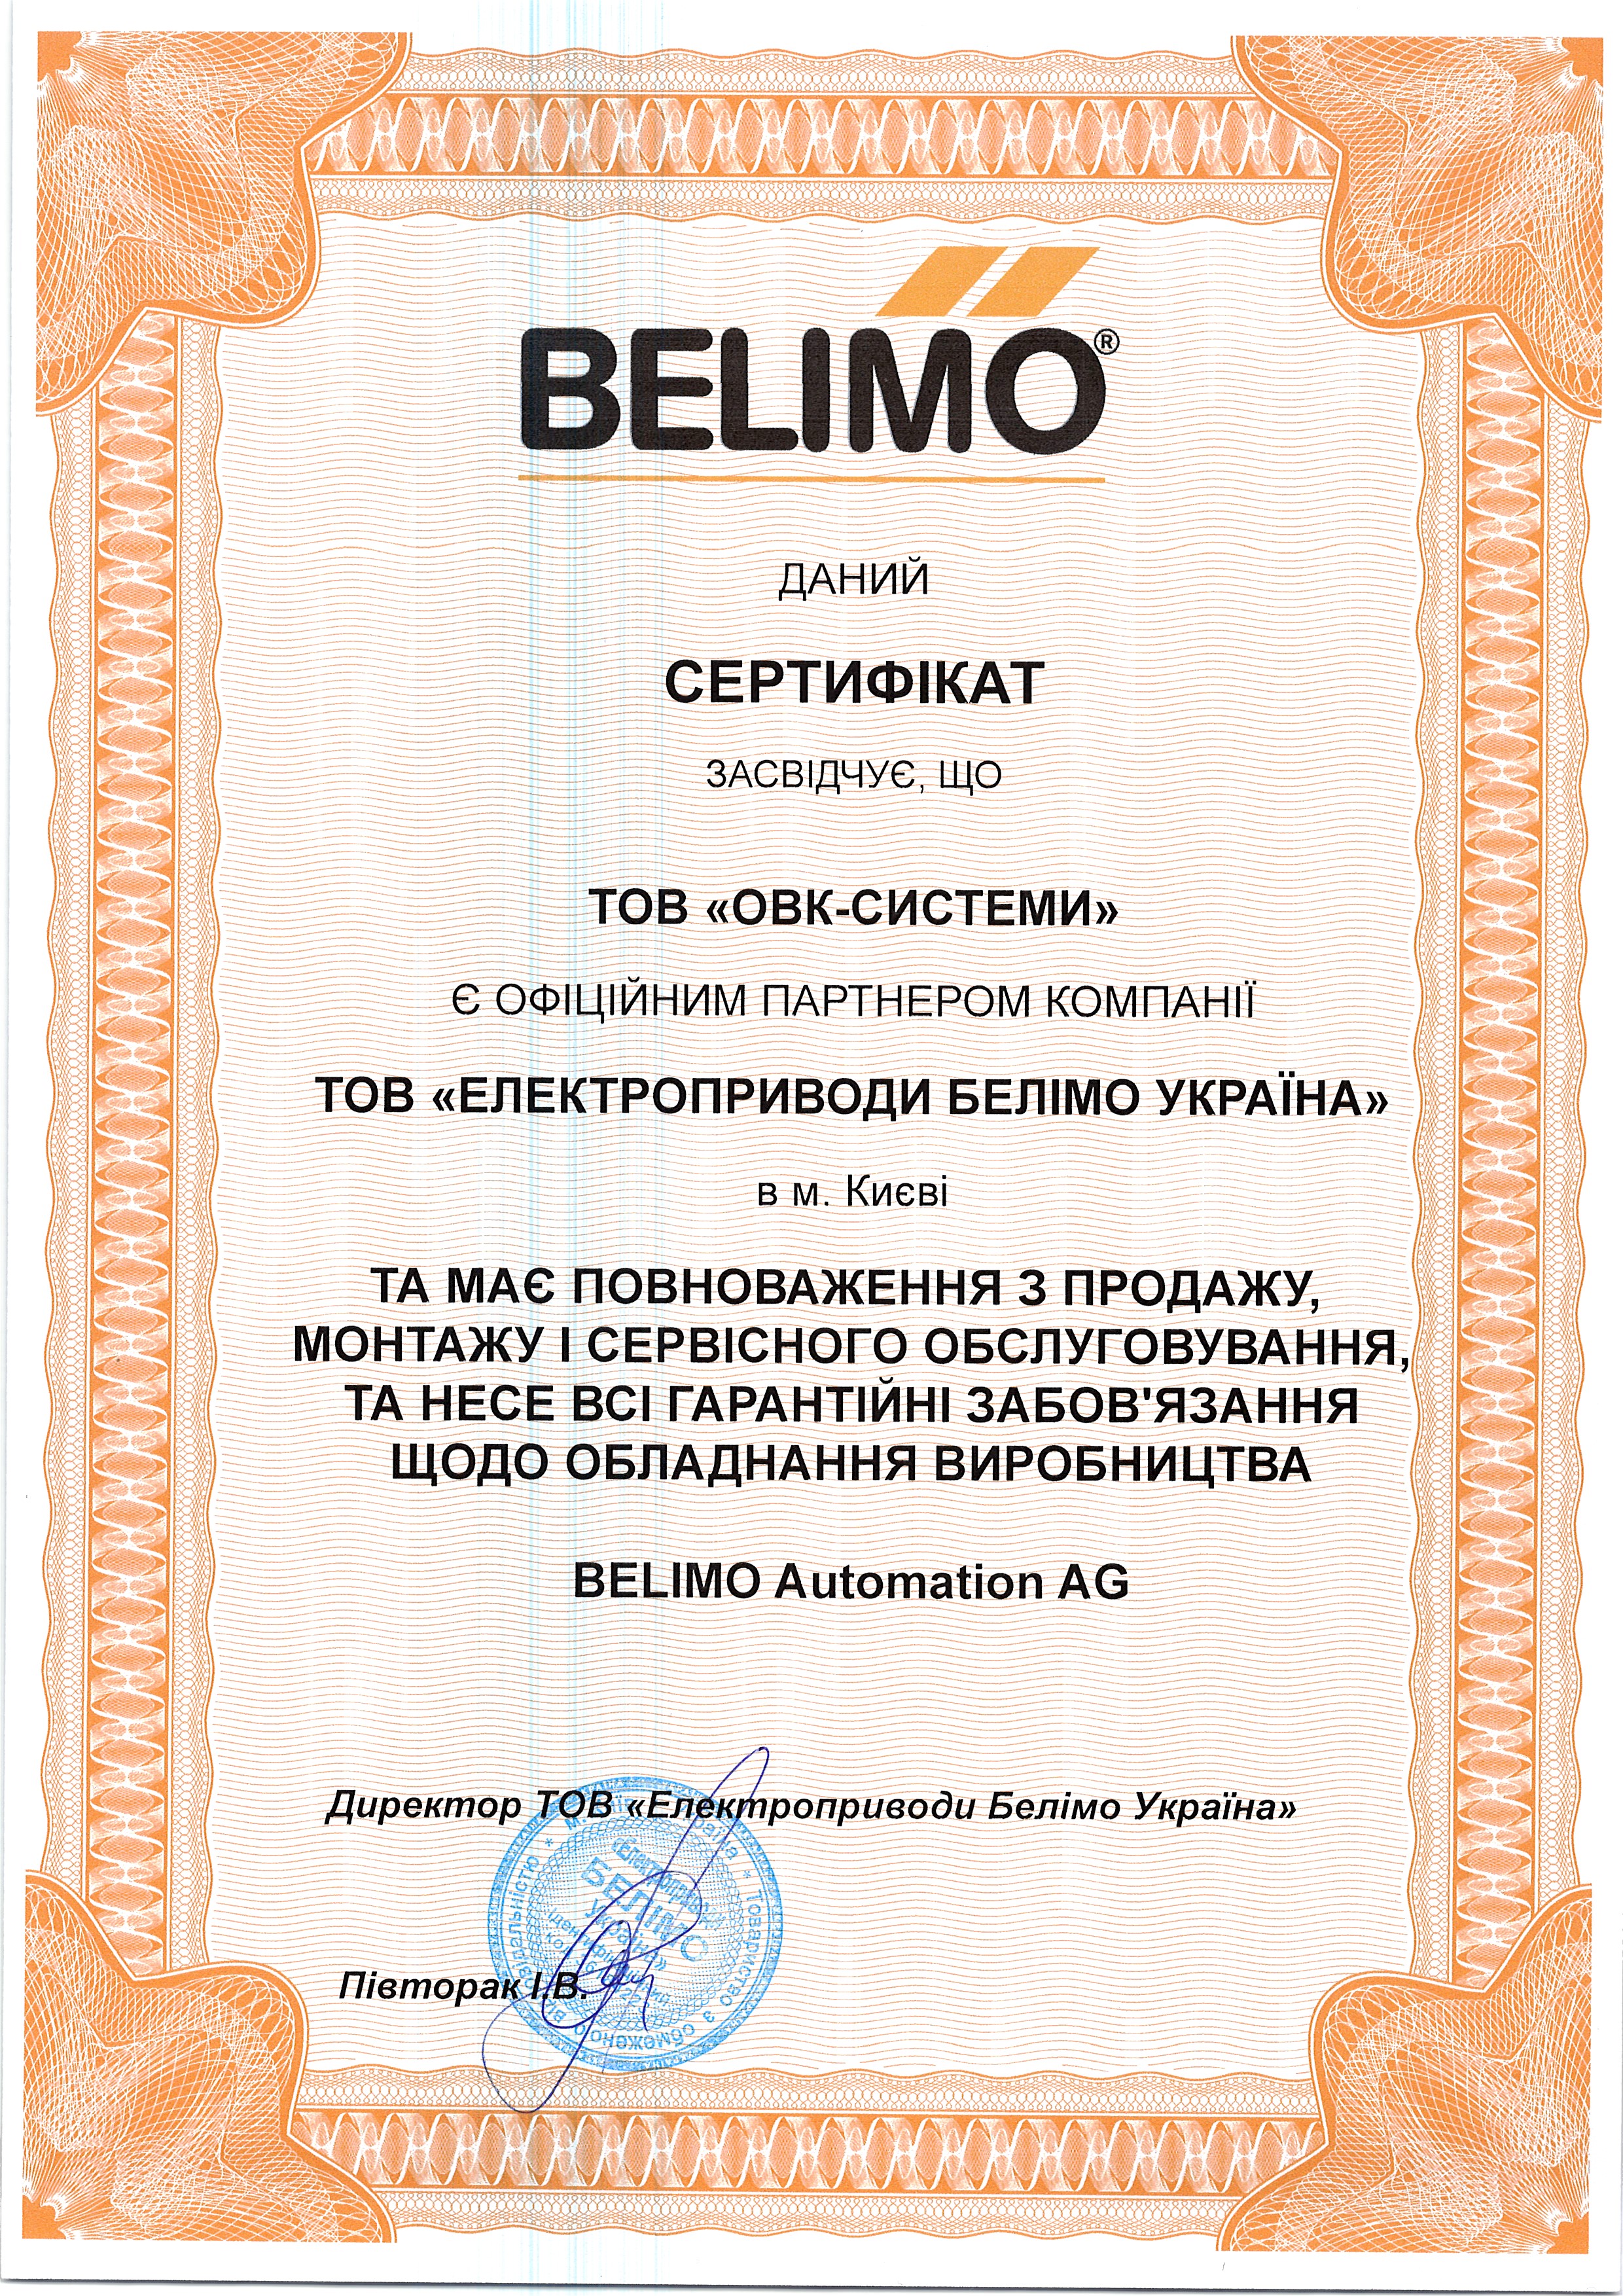 Сертифікат Belimo